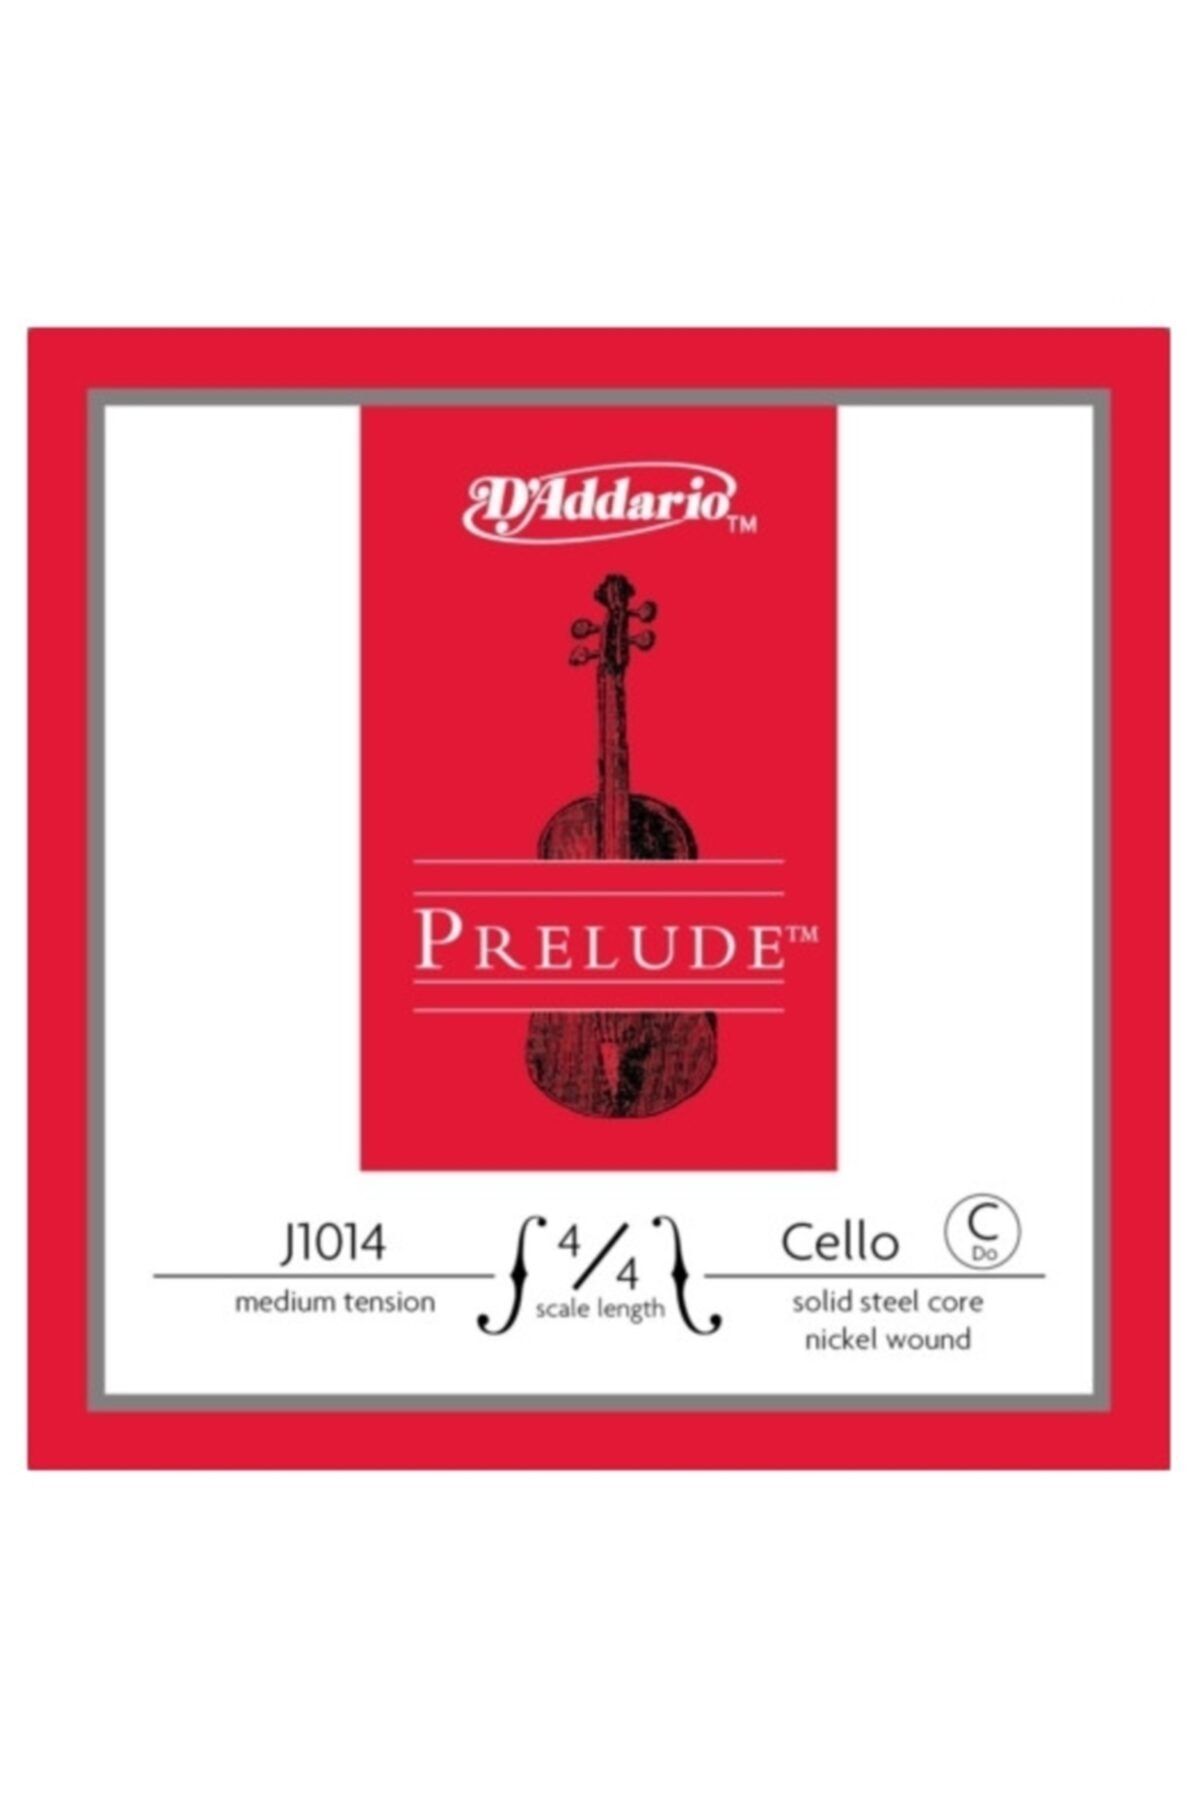 D'Addario Daddarıo J1014 4/4m Cello Tek Tel, Prelude, C-do, 4/4 Scale, Med